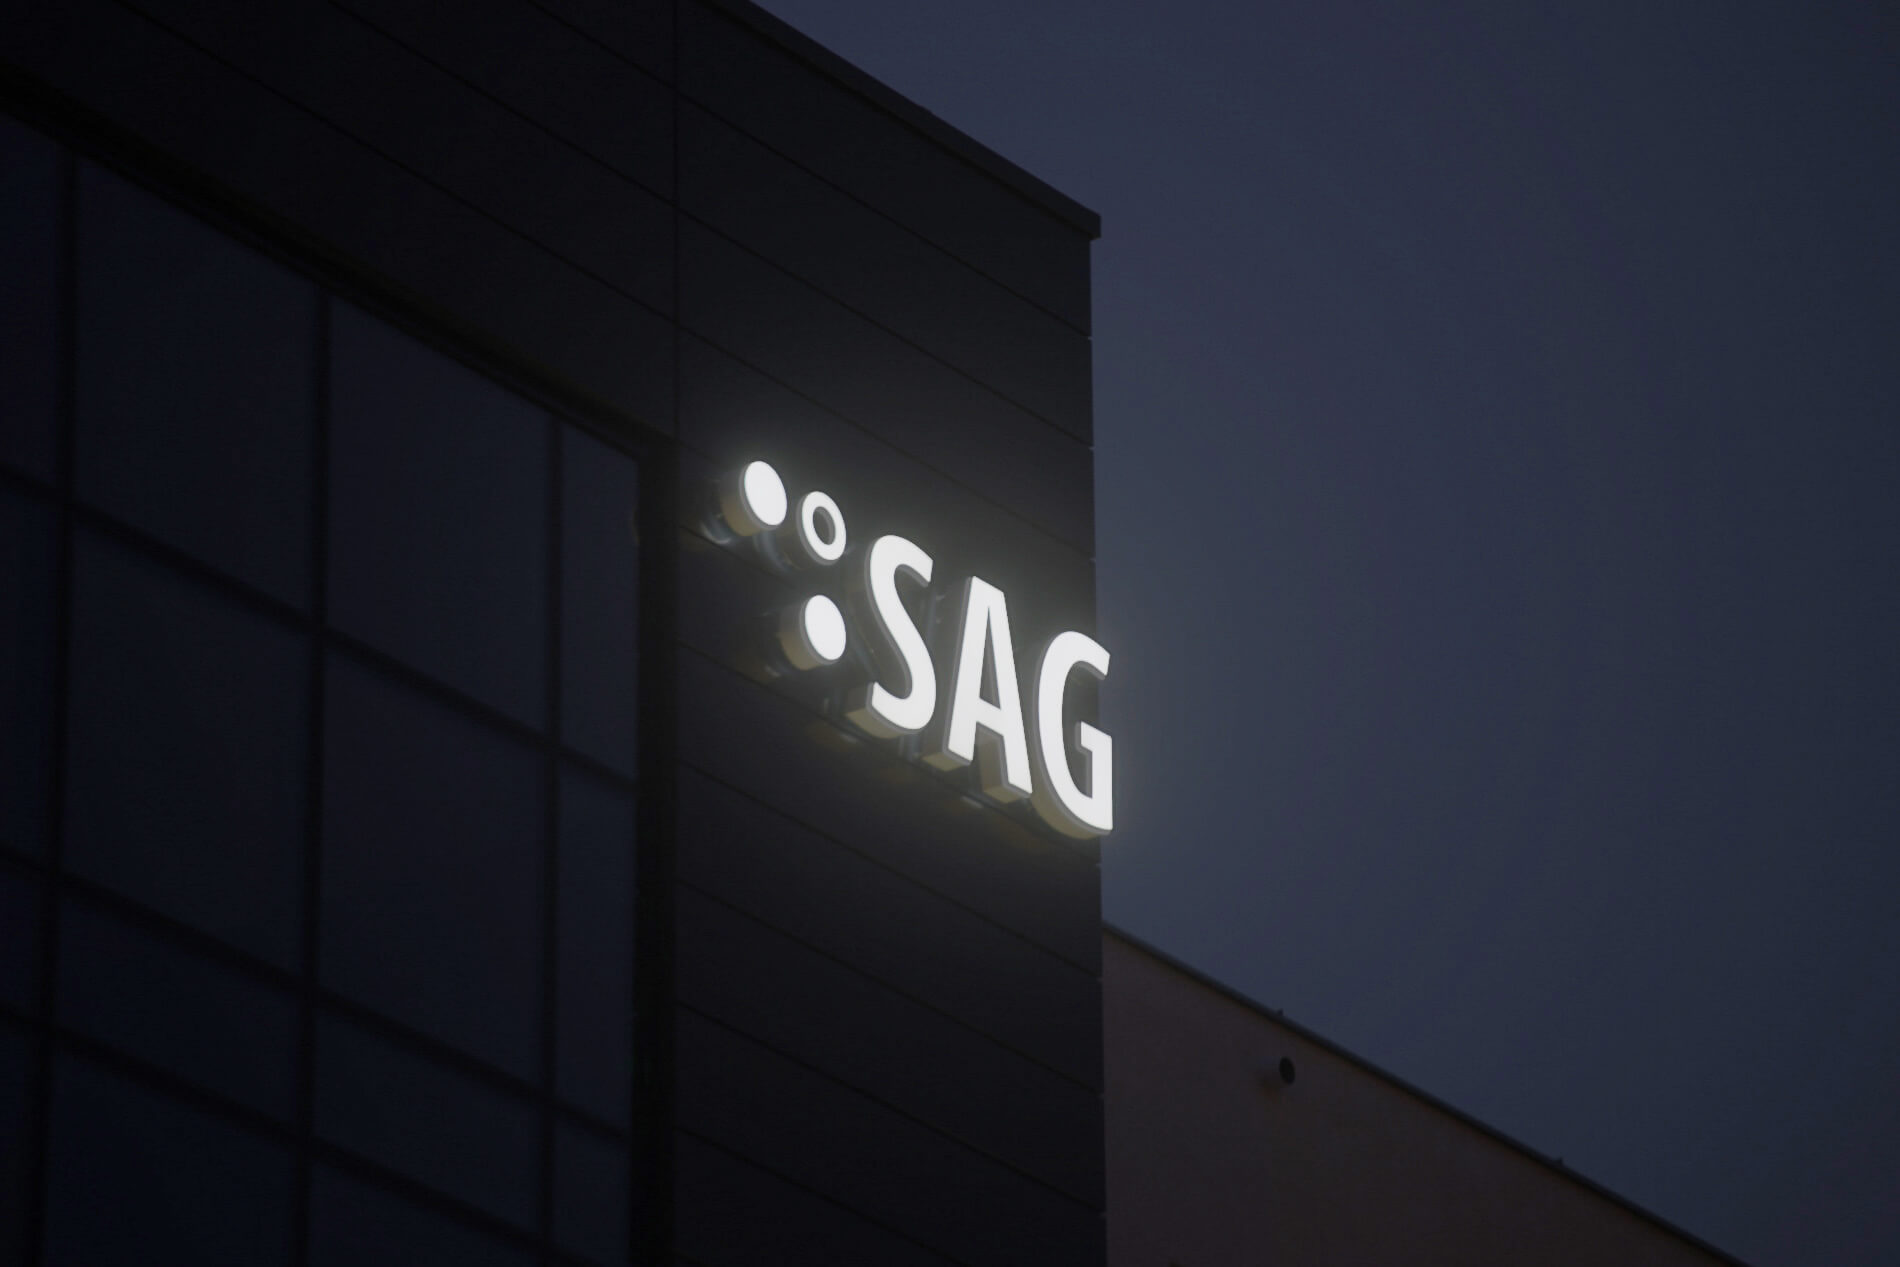 SAG - SAG - illuminated spatial lettering mounted on distances